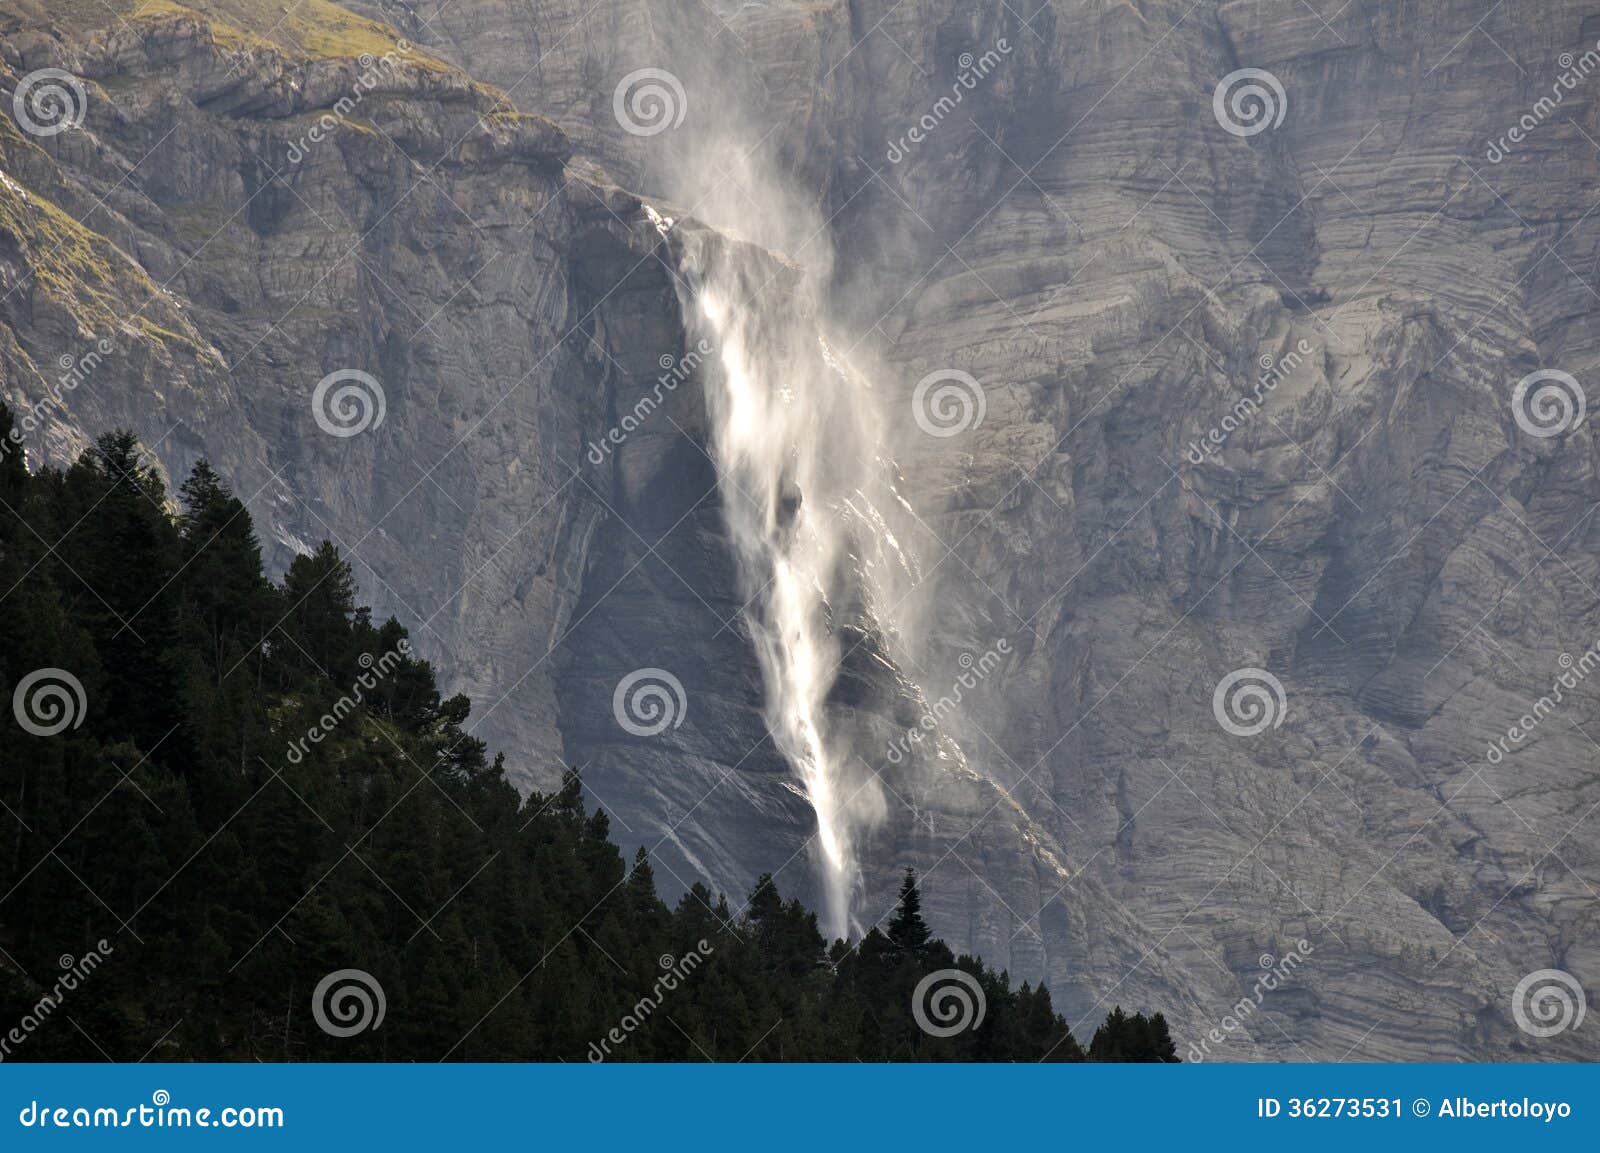 the big waterfall, cirque of gavarnie (france)